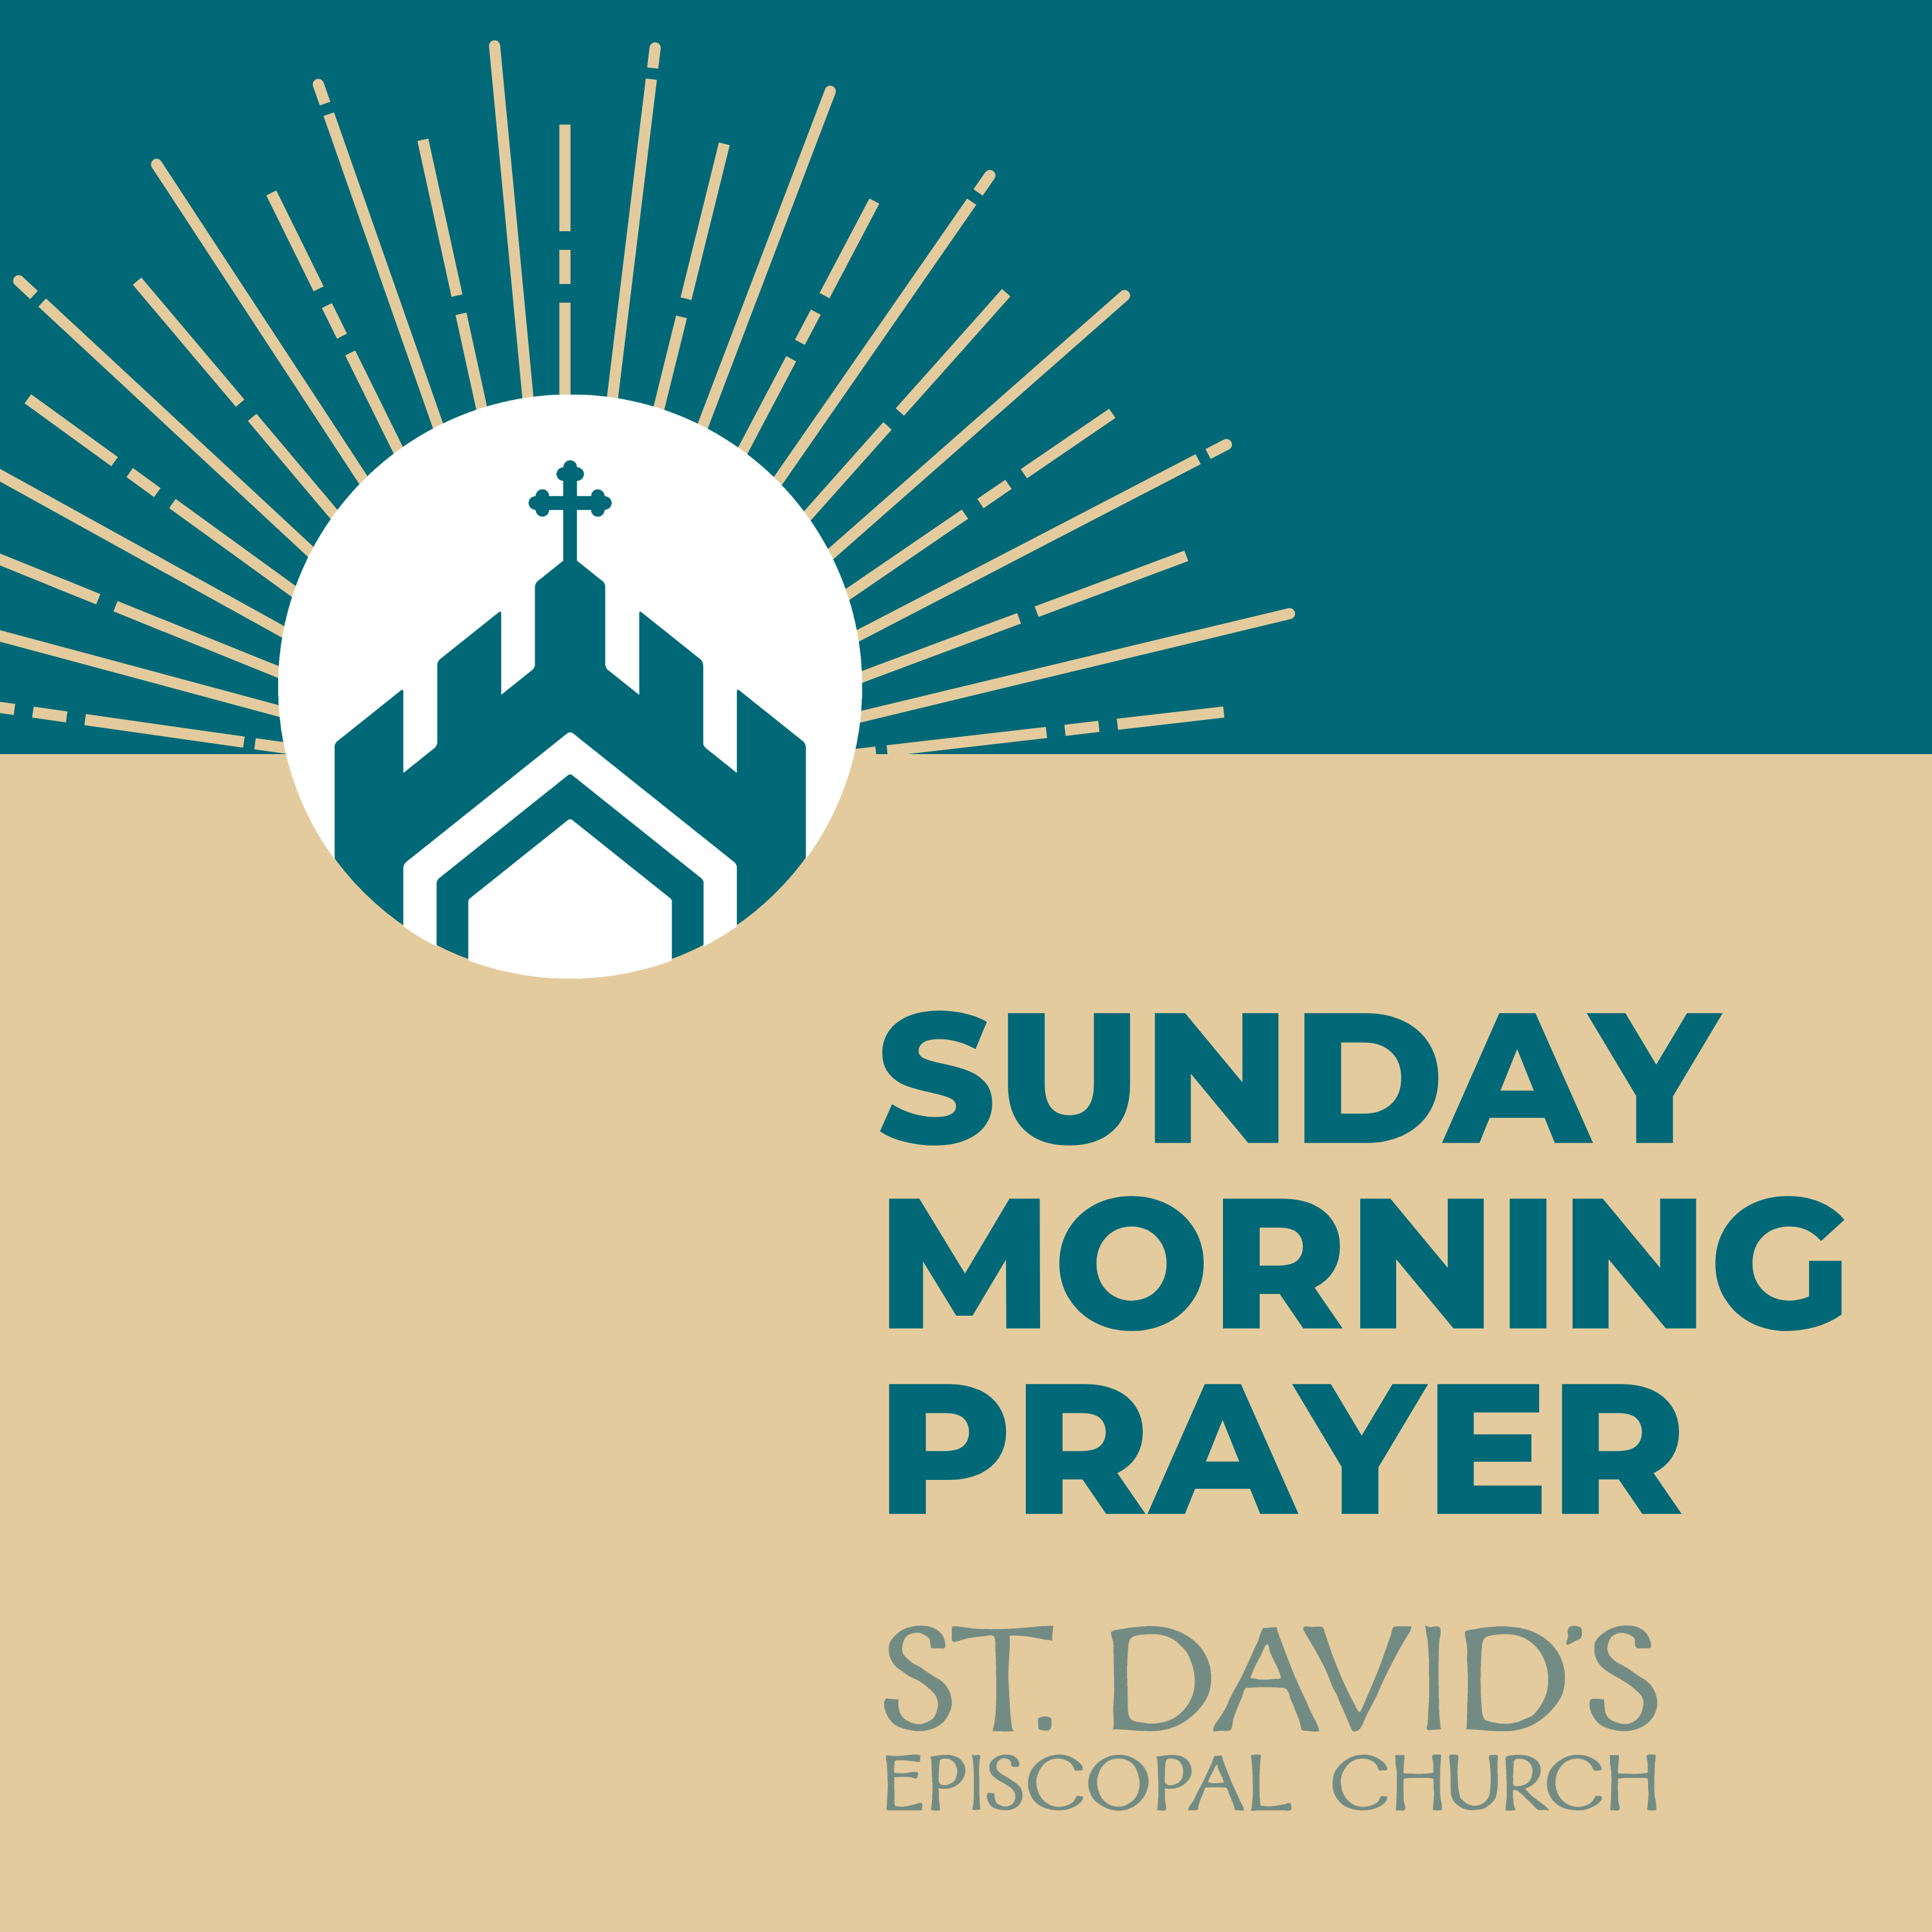 Sunday Morning Prayer: Rite Two, Year 2, 12th Sunday after Pentecost